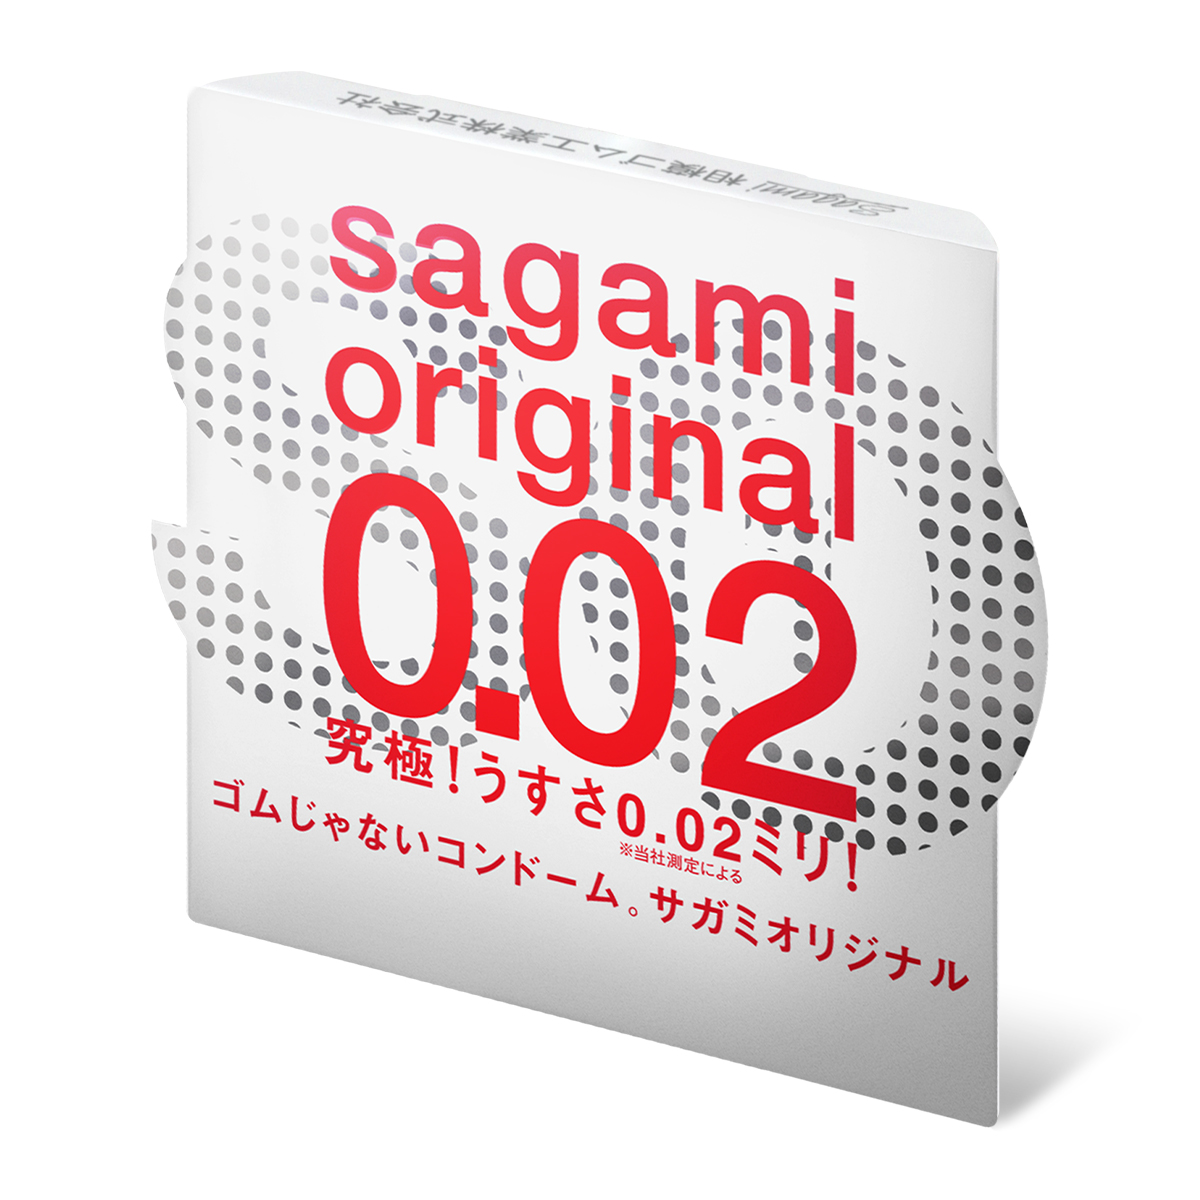 Sagami Original 0.02 (2nd generation) 1's Pack PU Condom-p_1